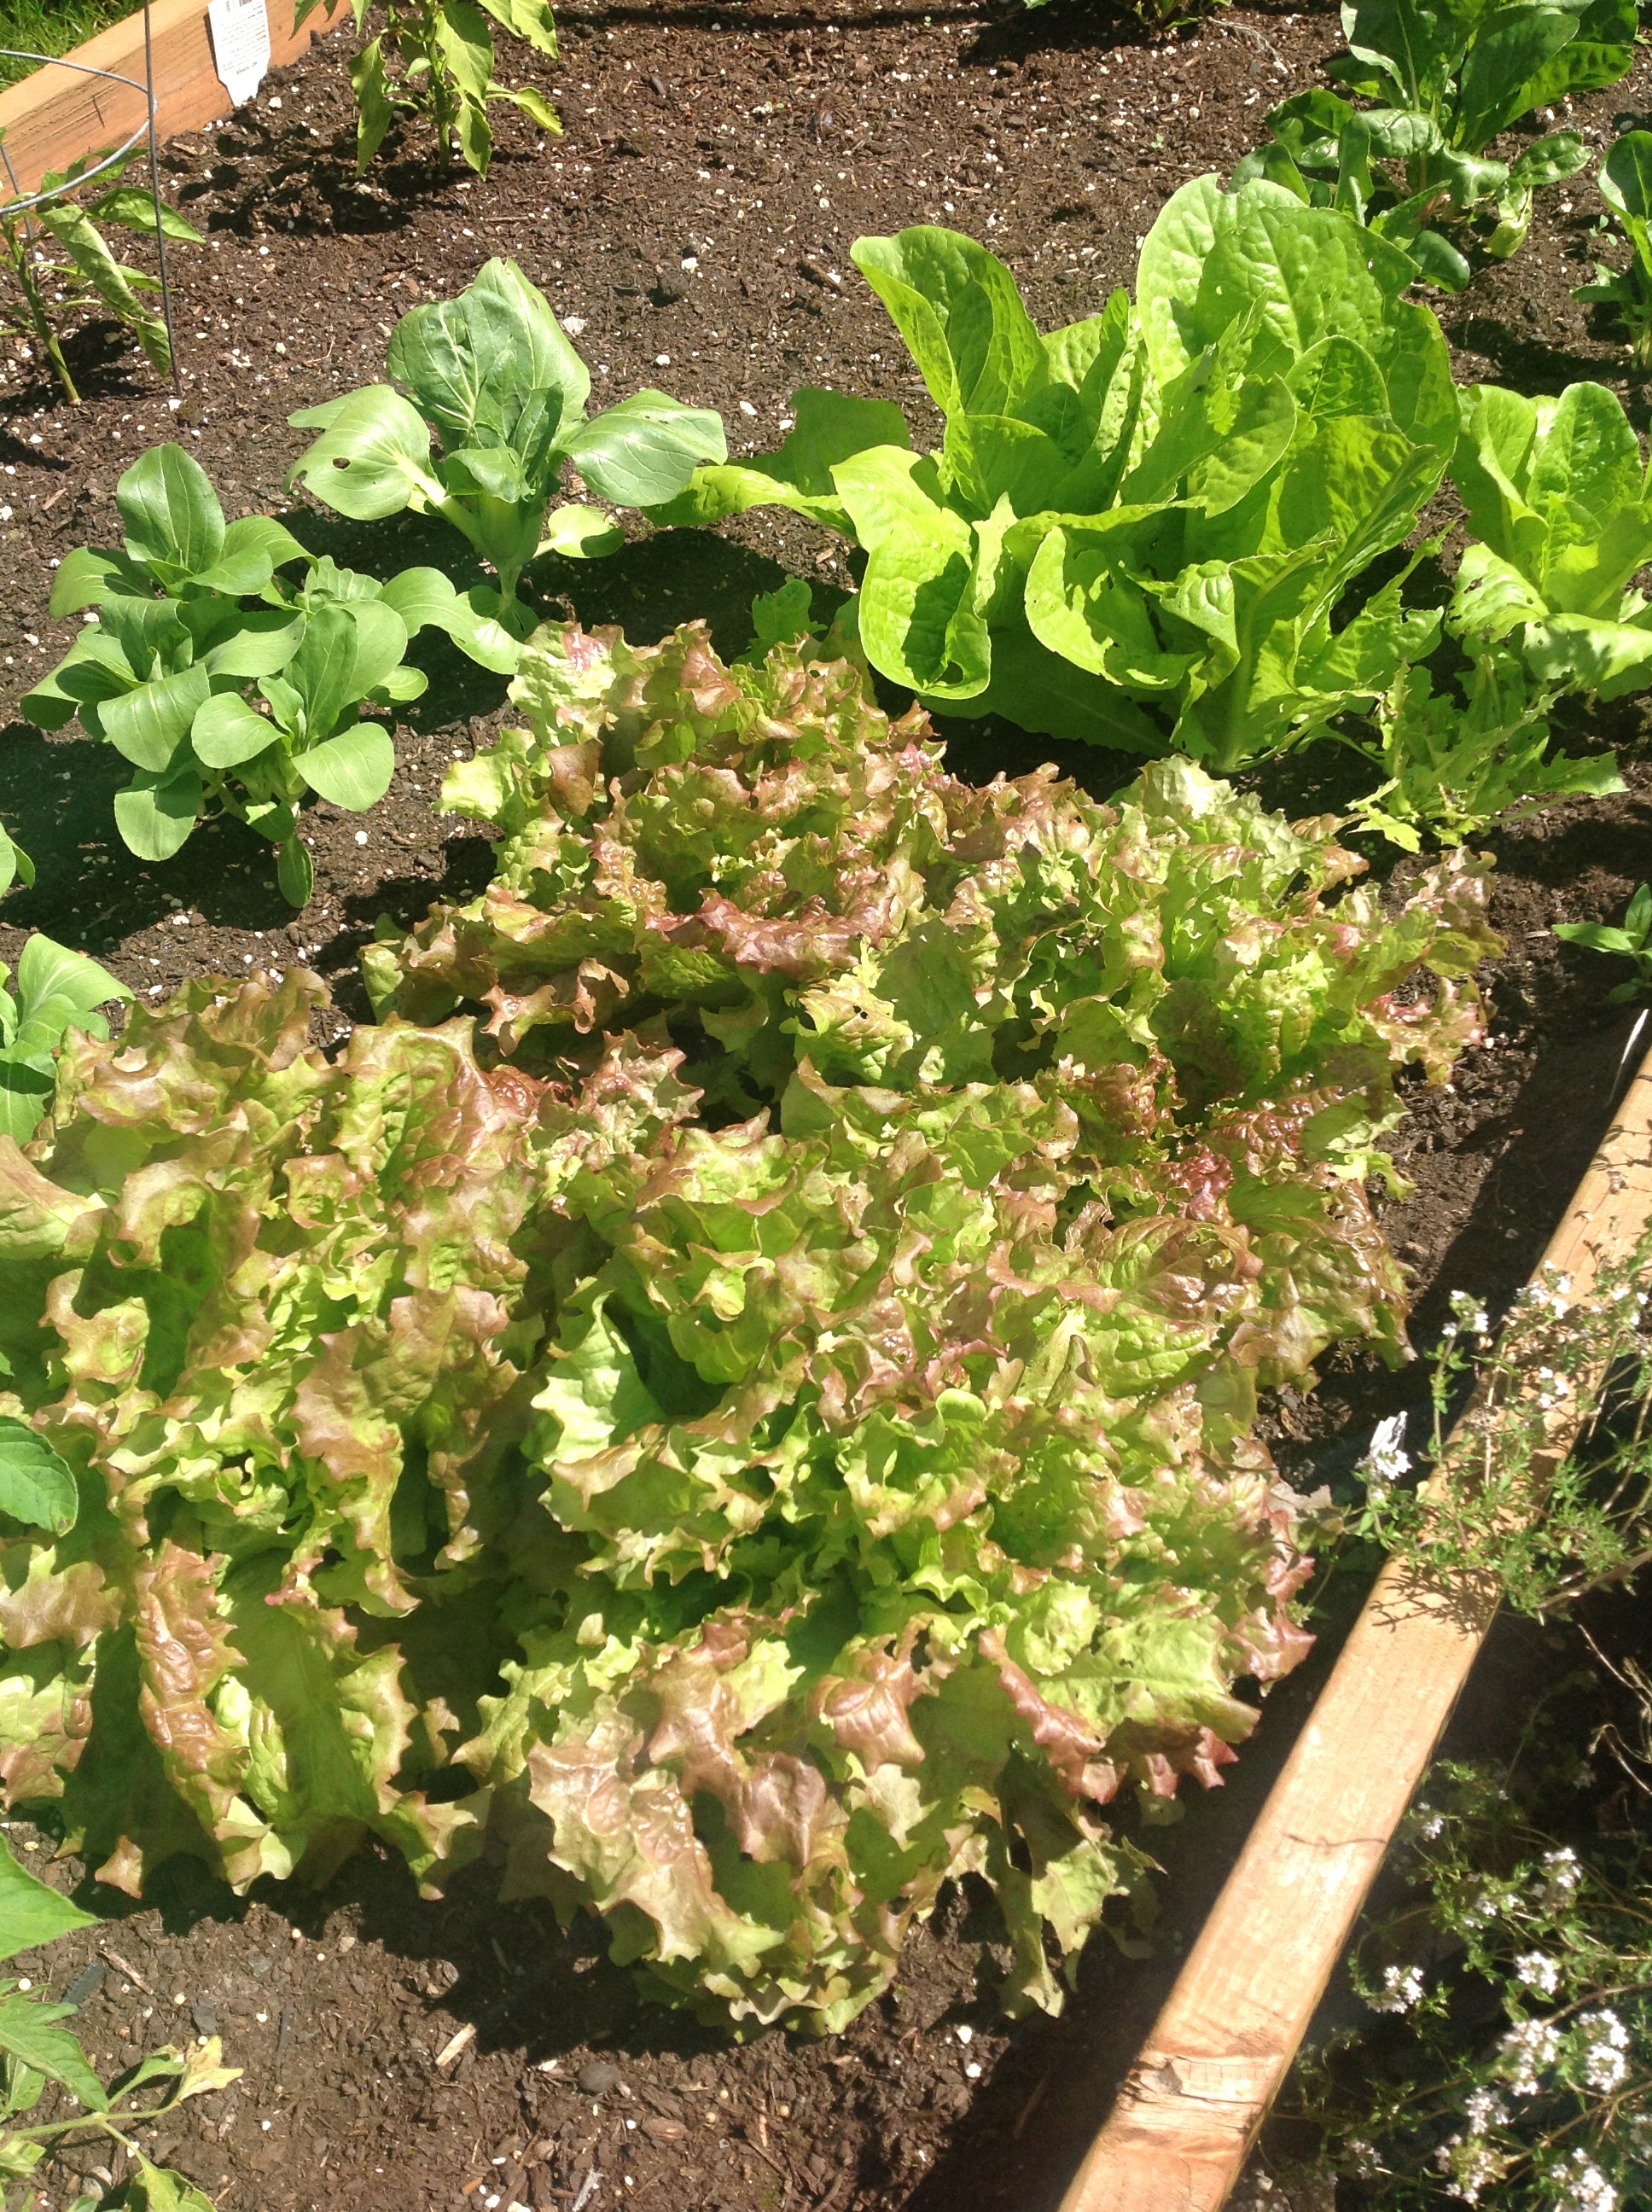 lettuces galore!